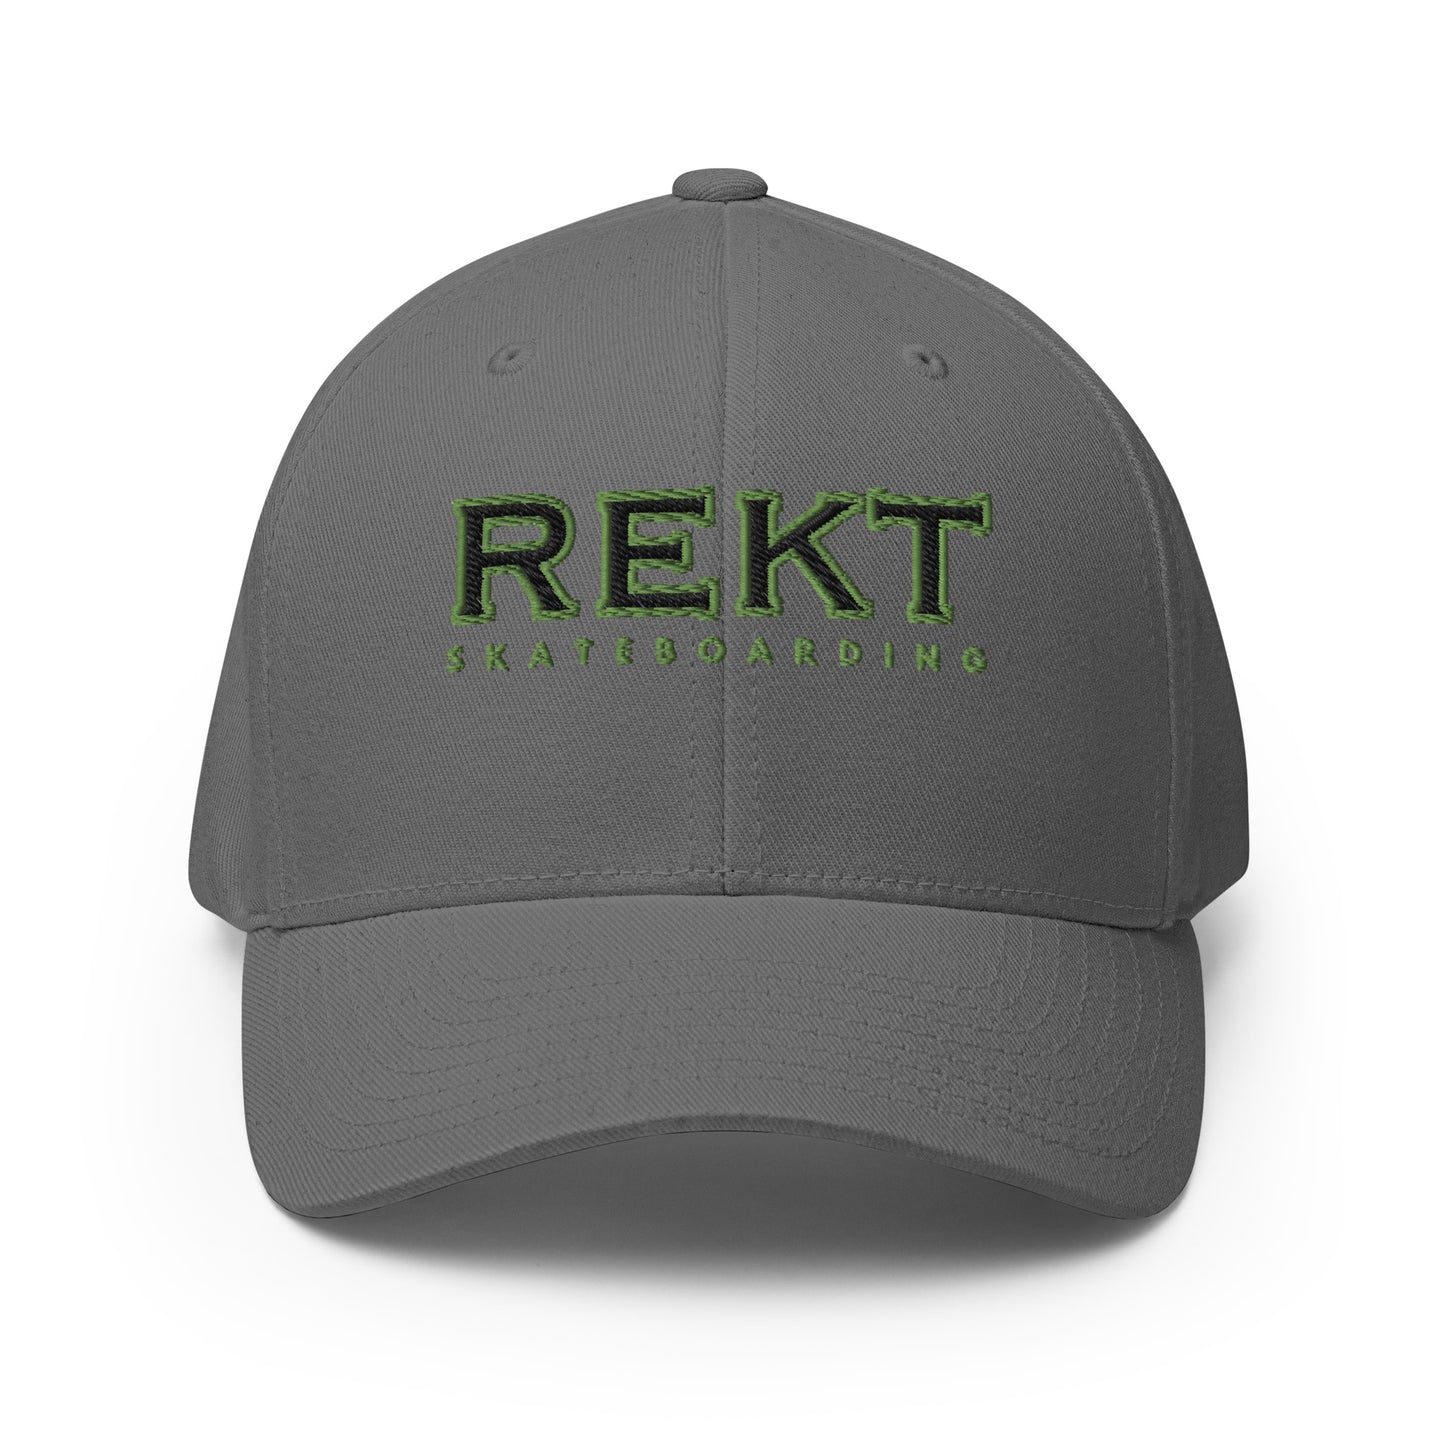 REKT Skateboarding Flexfit Structured Twill Cap